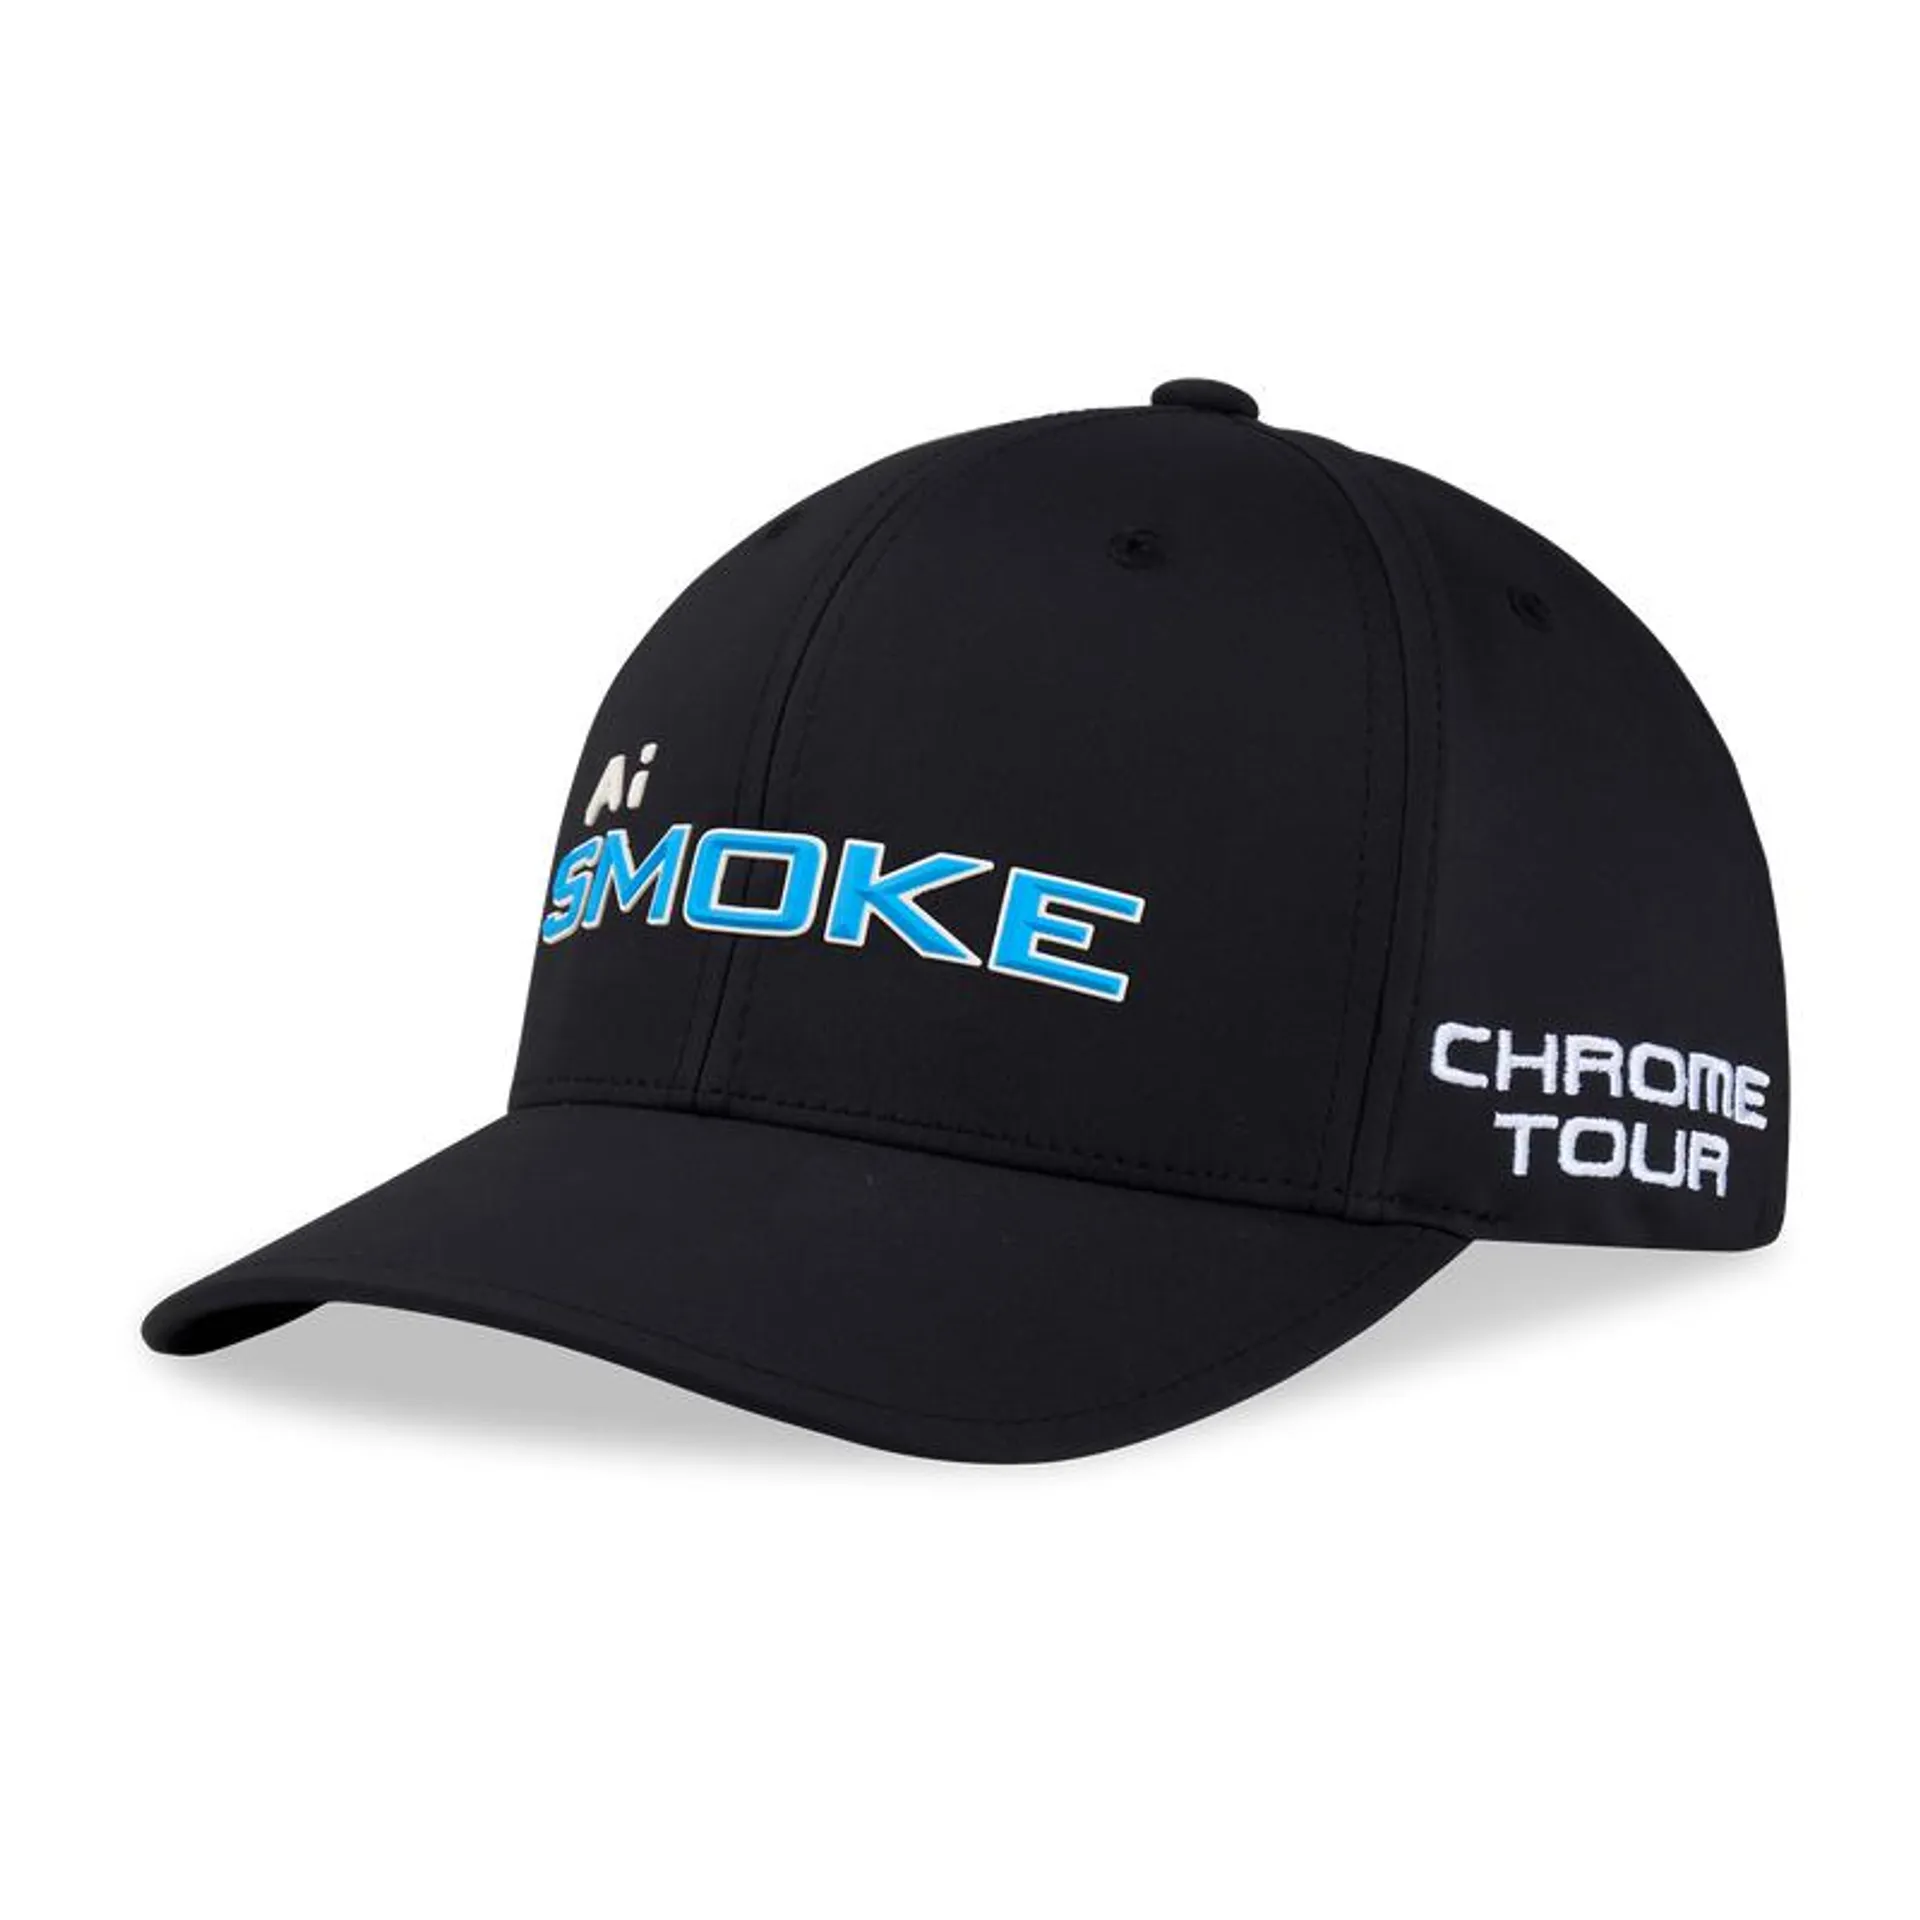 Tour Authentic Performance Pro Ai Smoke Hat